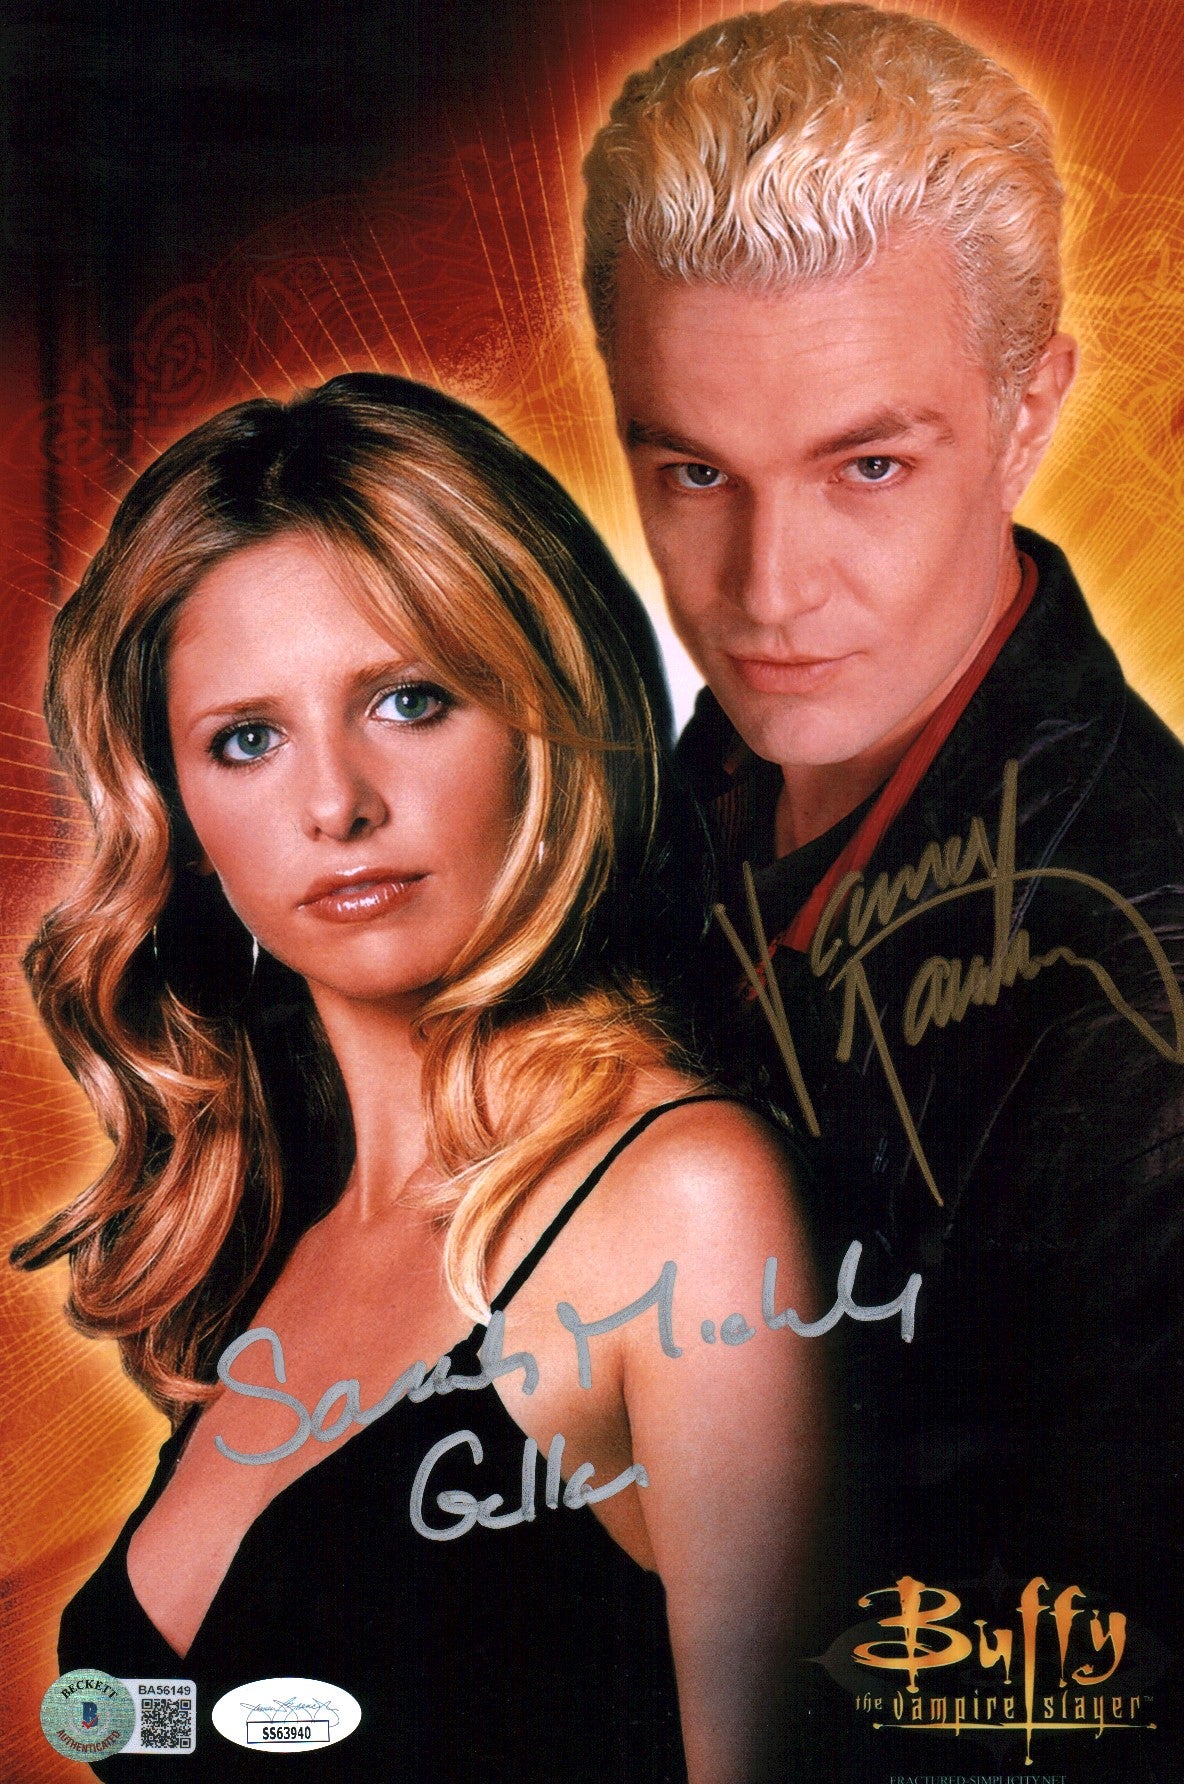 Buffy the Vampire Slayer 8x12 Signed Photo Gellar Marsters Beckett JSA COA Certified Autograph GalaxyCon